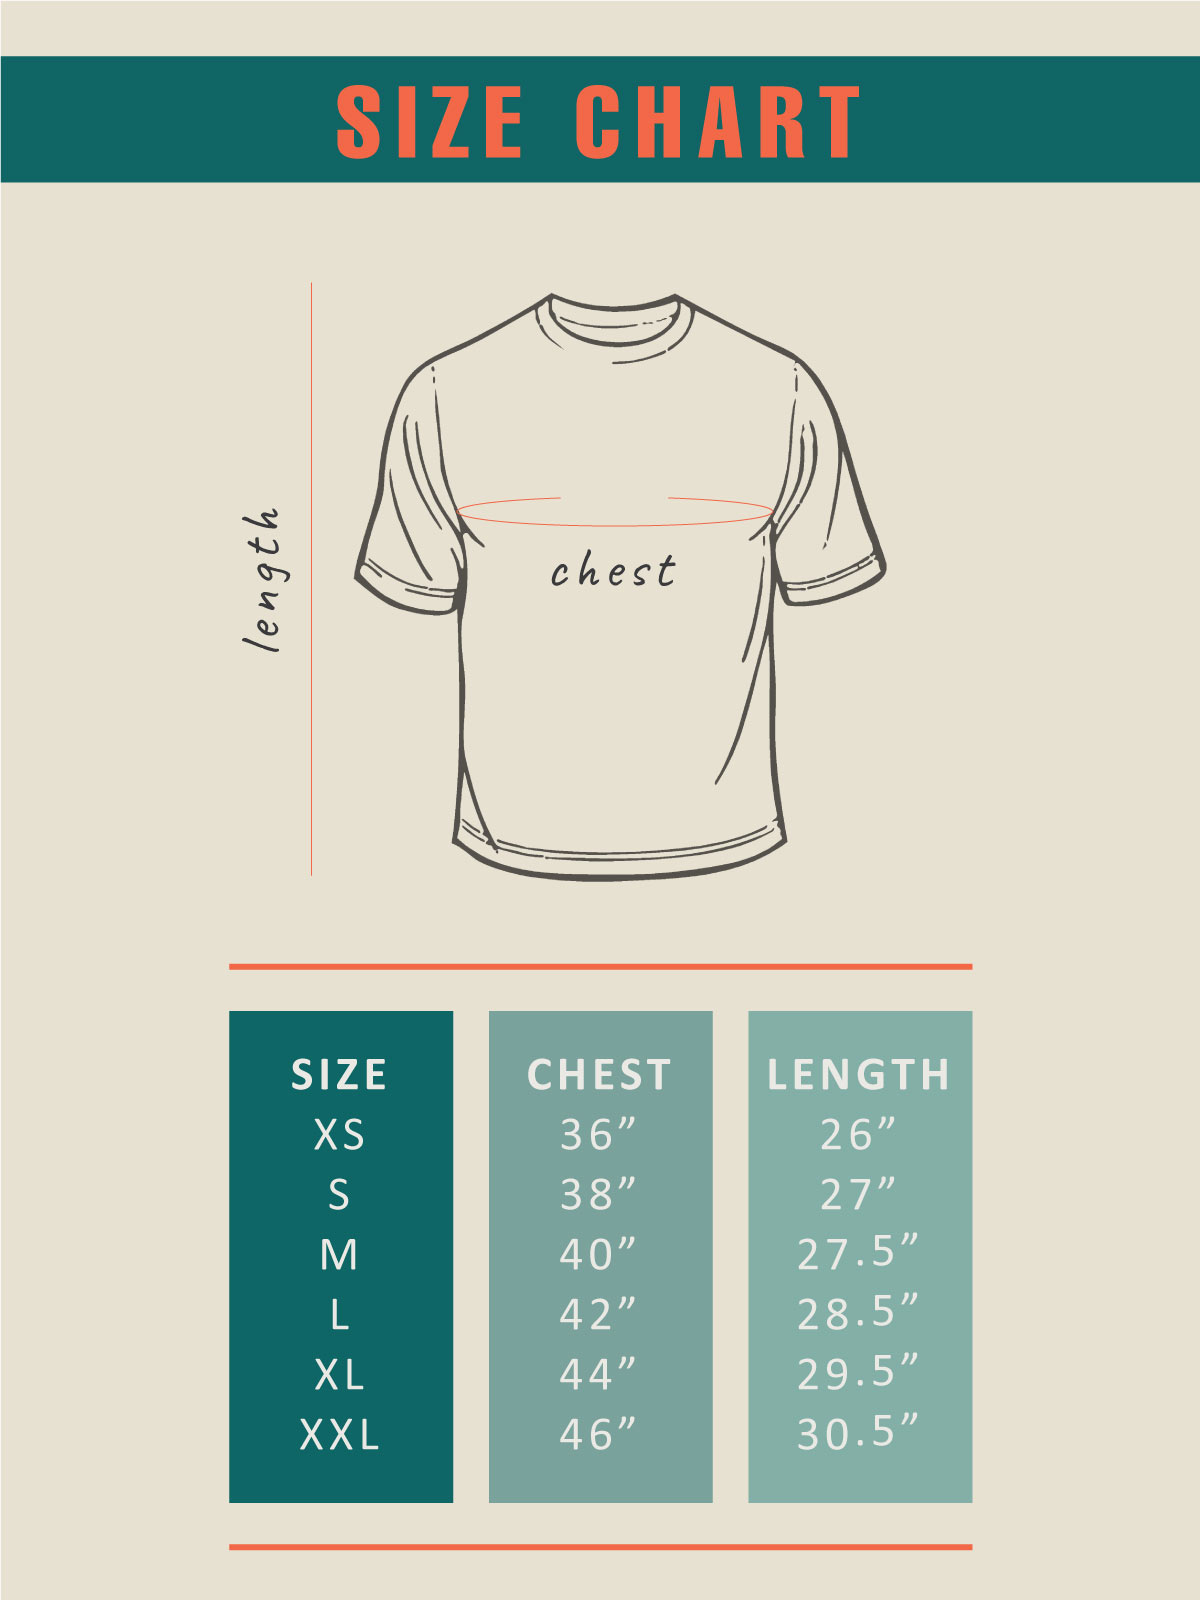 Shopghumakkad size chart for unisex Tshirts